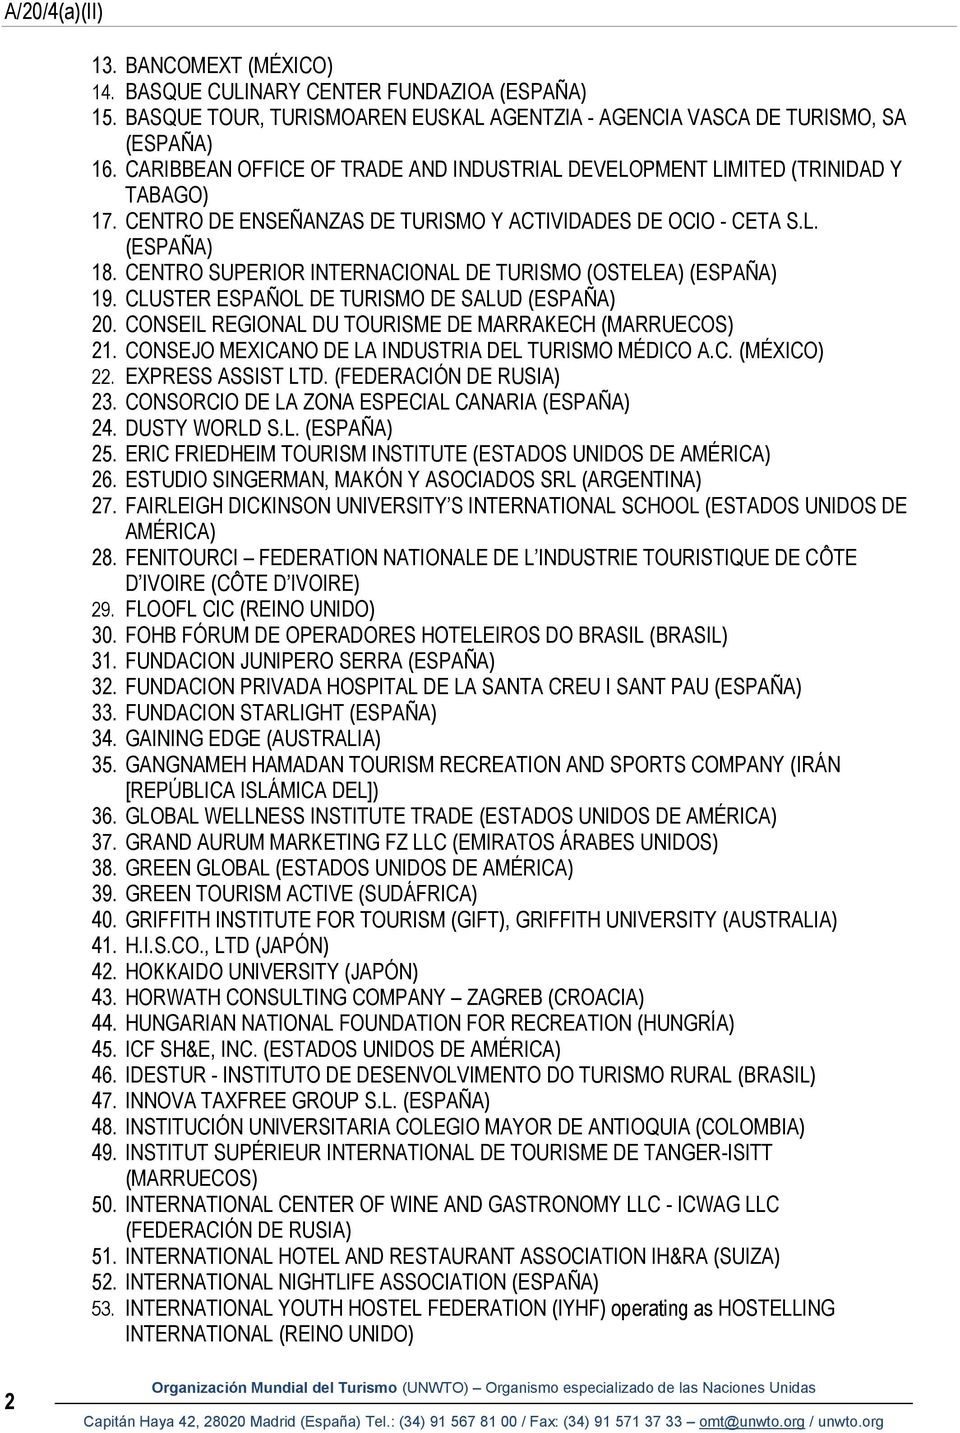 CENTRO SUPERIOR INTERNACIONAL DE TURISMO (OSTELEA) (ESPAÑA) 19. CLUSTER ESPAÑOL DE TURISMO DE SALUD (ESPAÑA) 20. CONSEIL REGIONAL DU TOURISME DE MARRAKECH (MARRUECOS) 21.